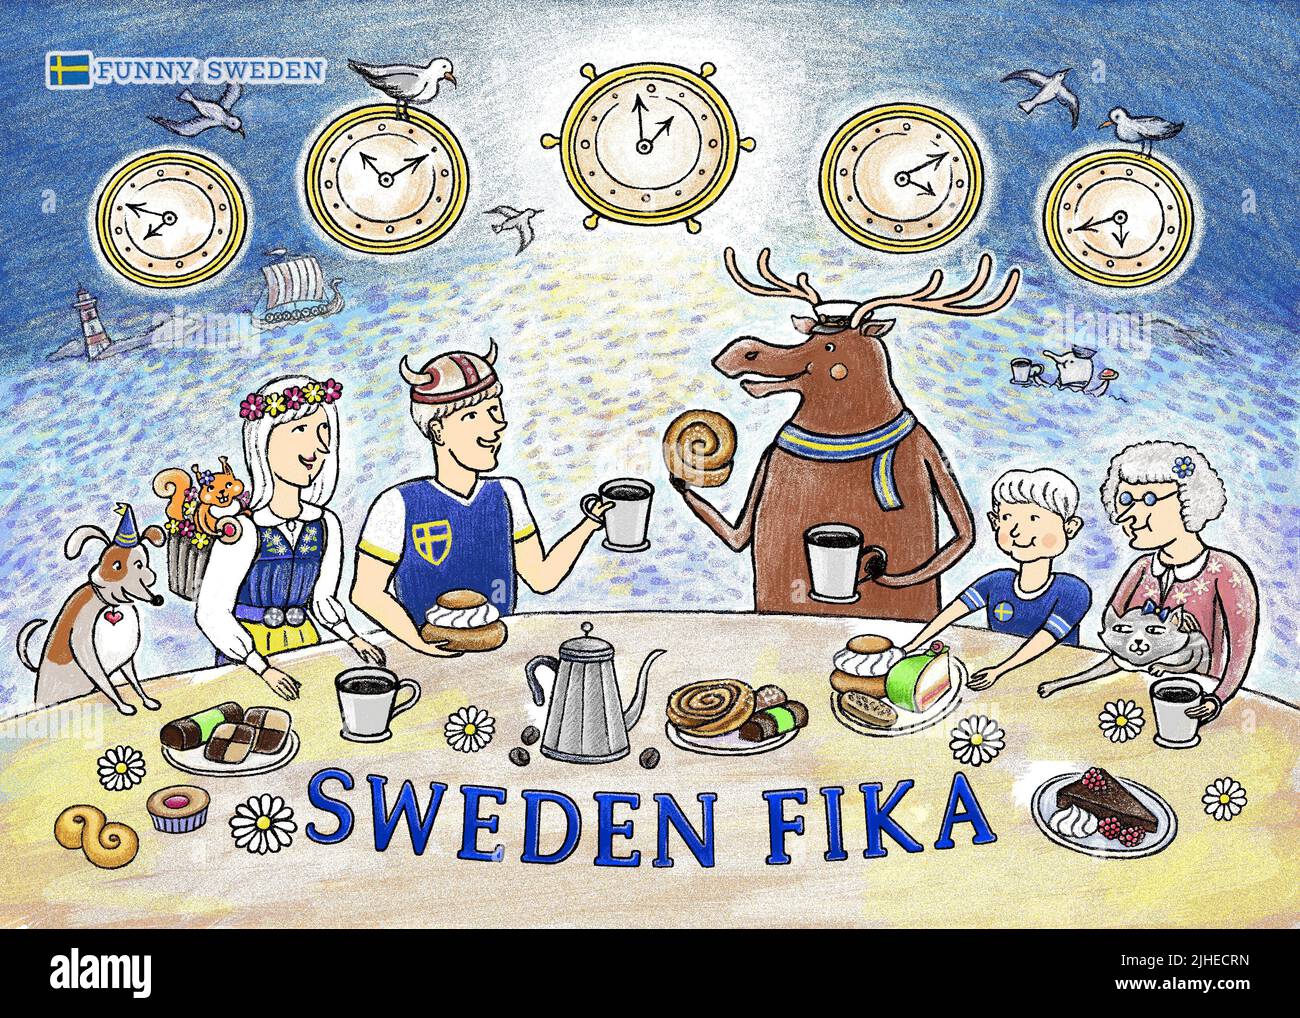 Swedish fika Stock Photo